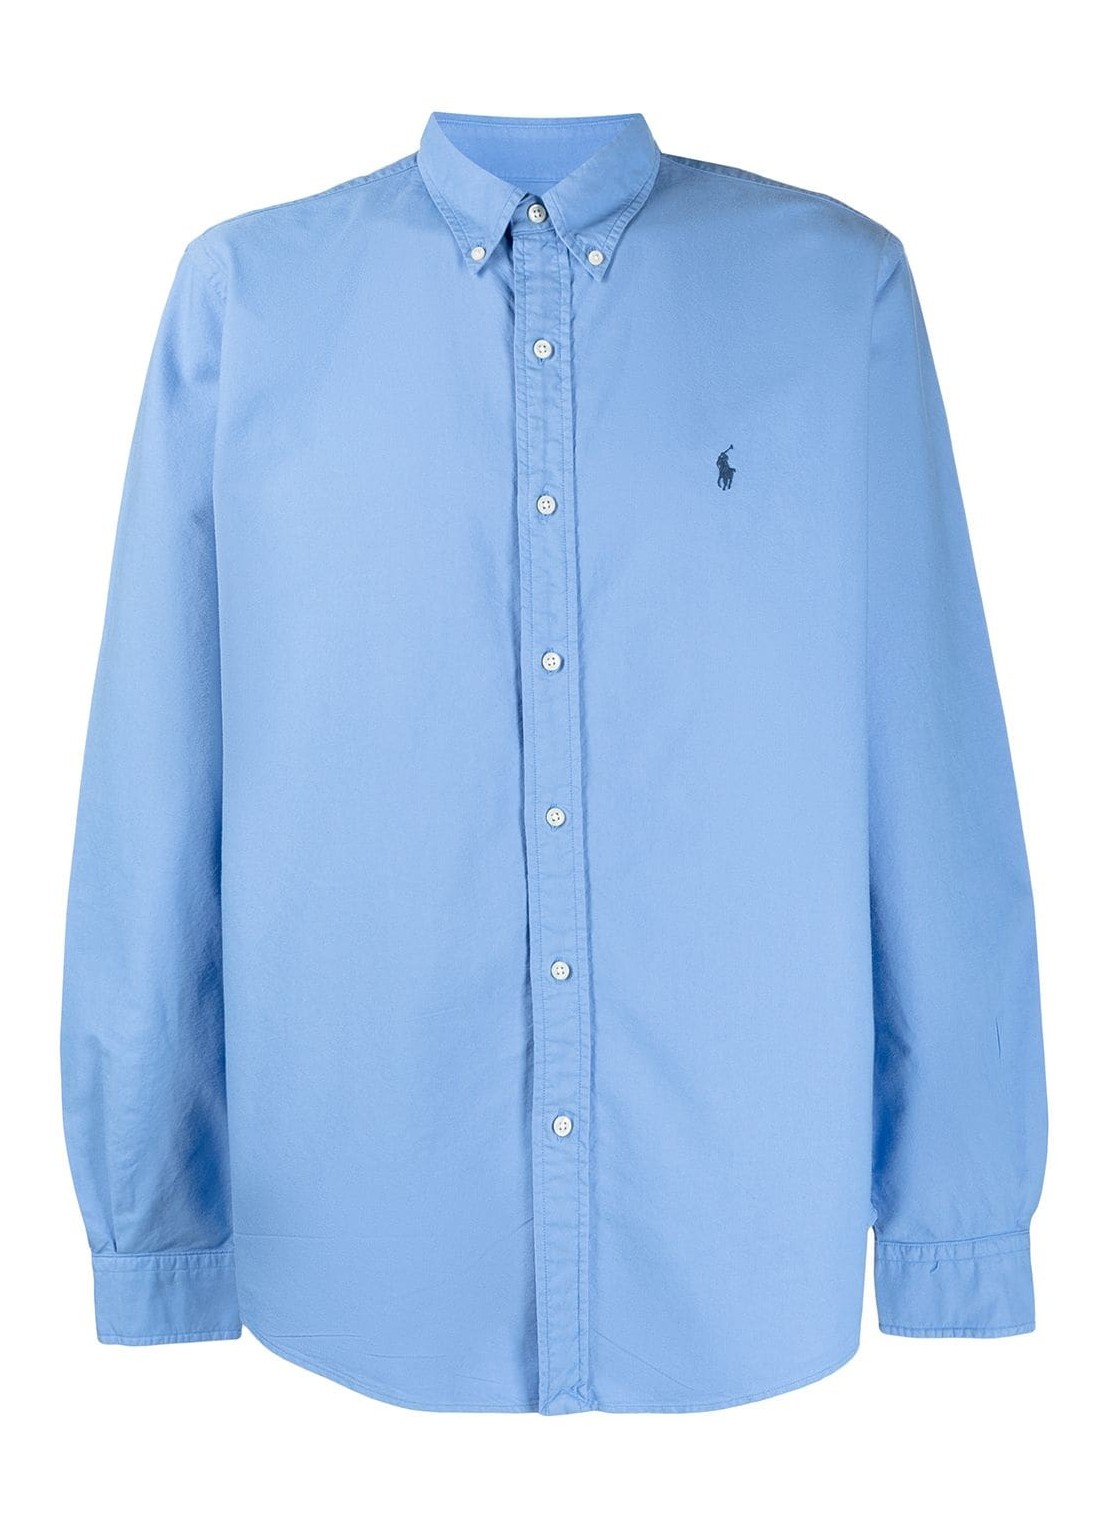 Camiseria polo ralph lauren shirt man cubdppcs-long sleeve-sport shirt 710805564015 harbor island bl